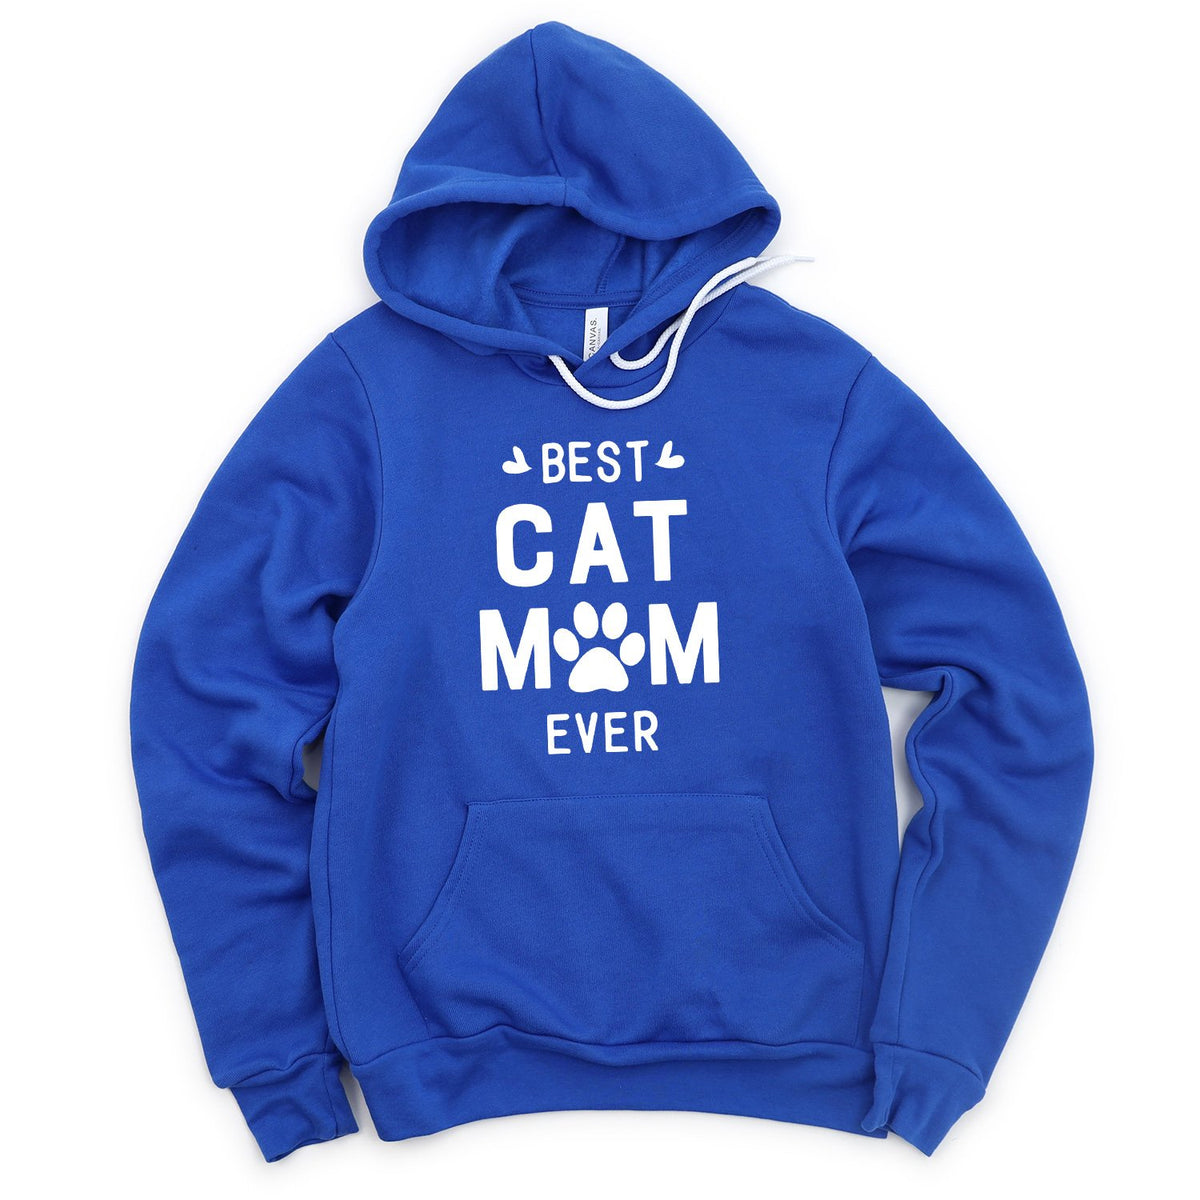 Best Cat Mom Ever - Hoodie Sweatshirt